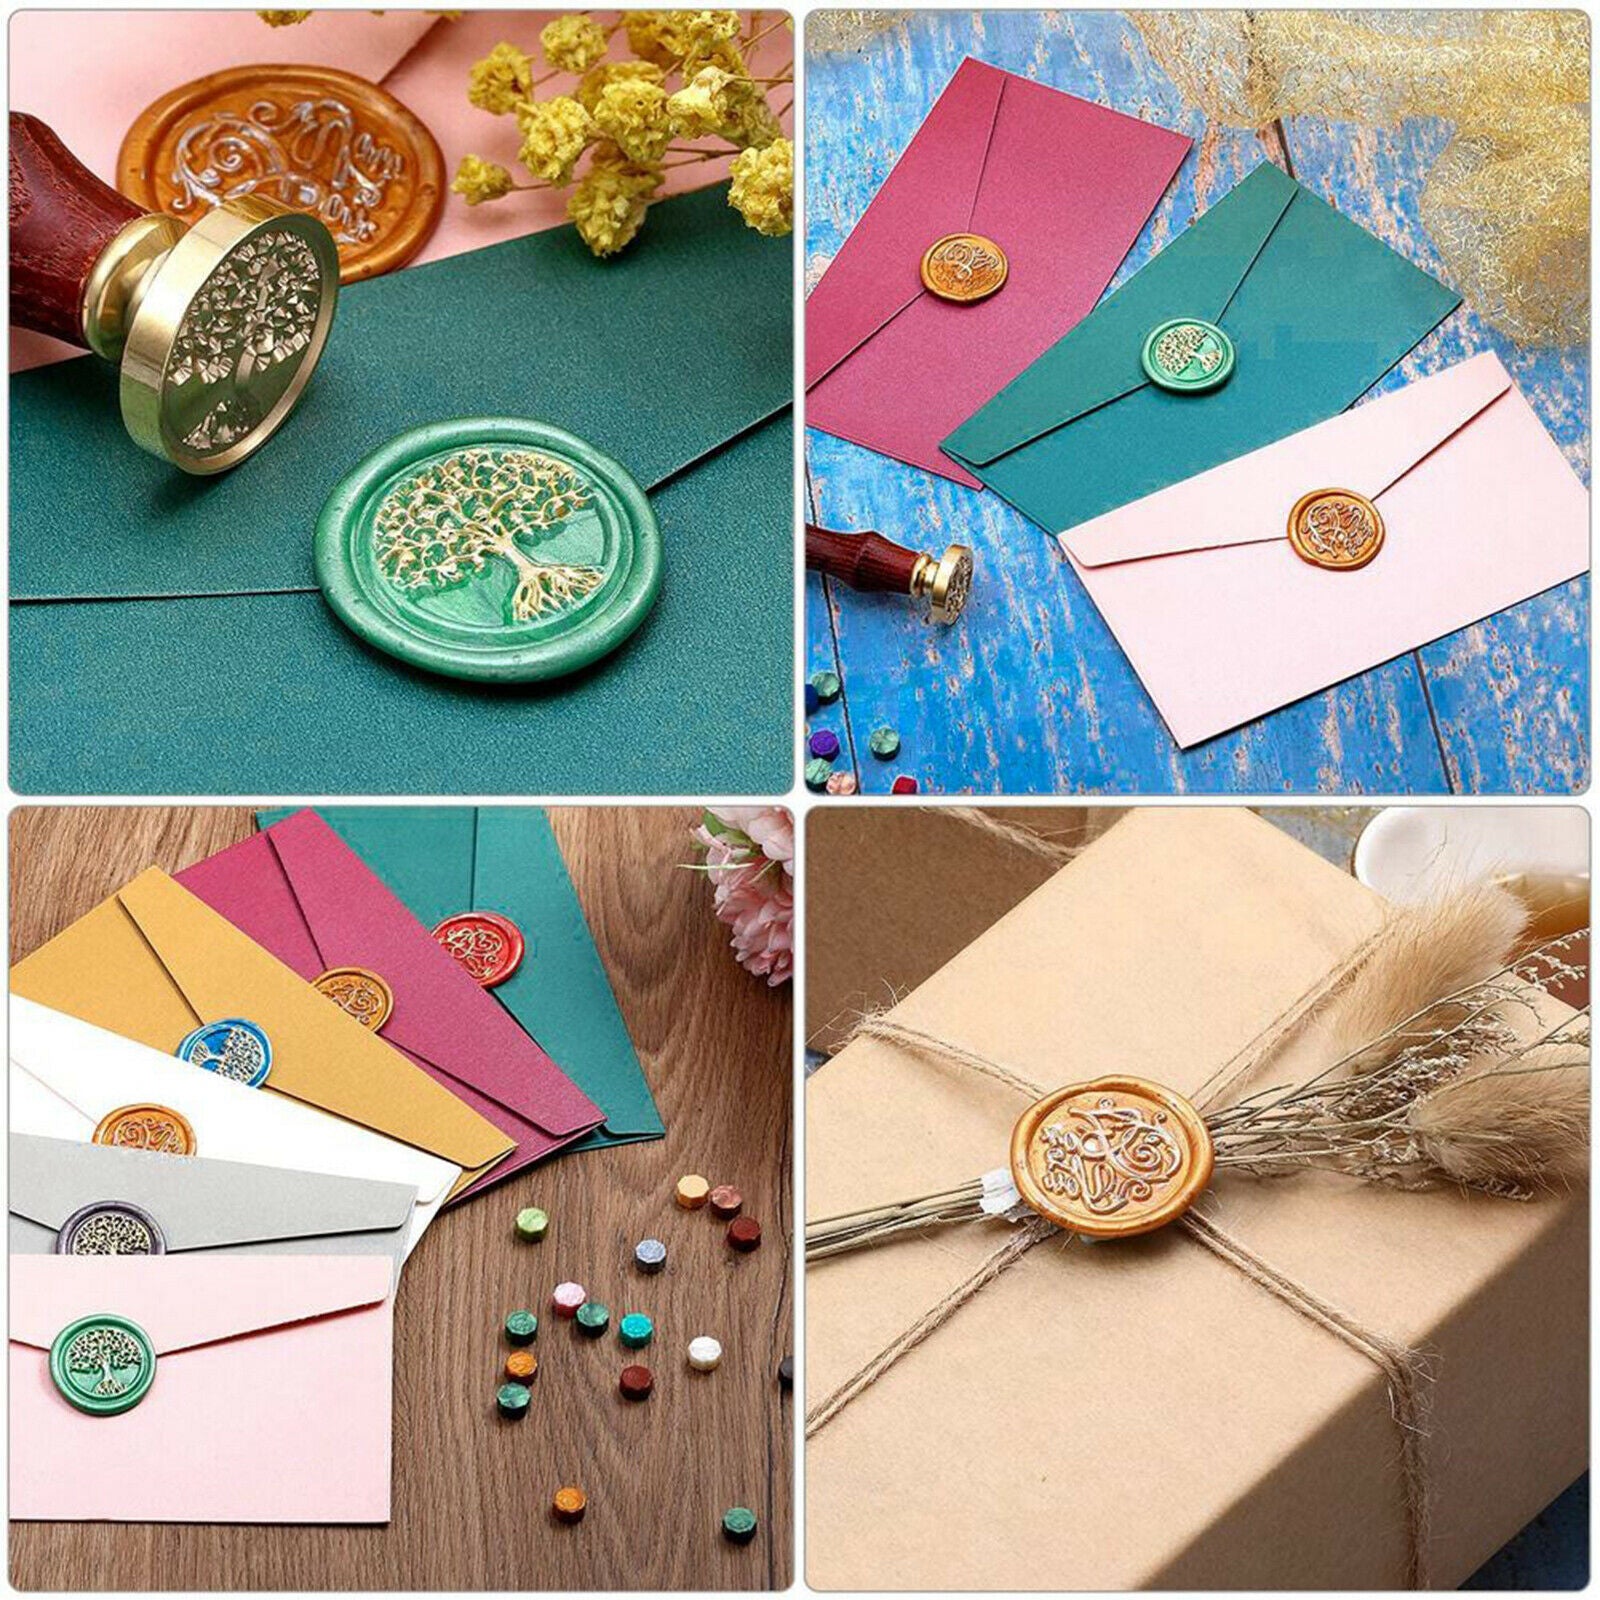 Wax sealing kit for wedding invitations DIY scrapbooking decoration